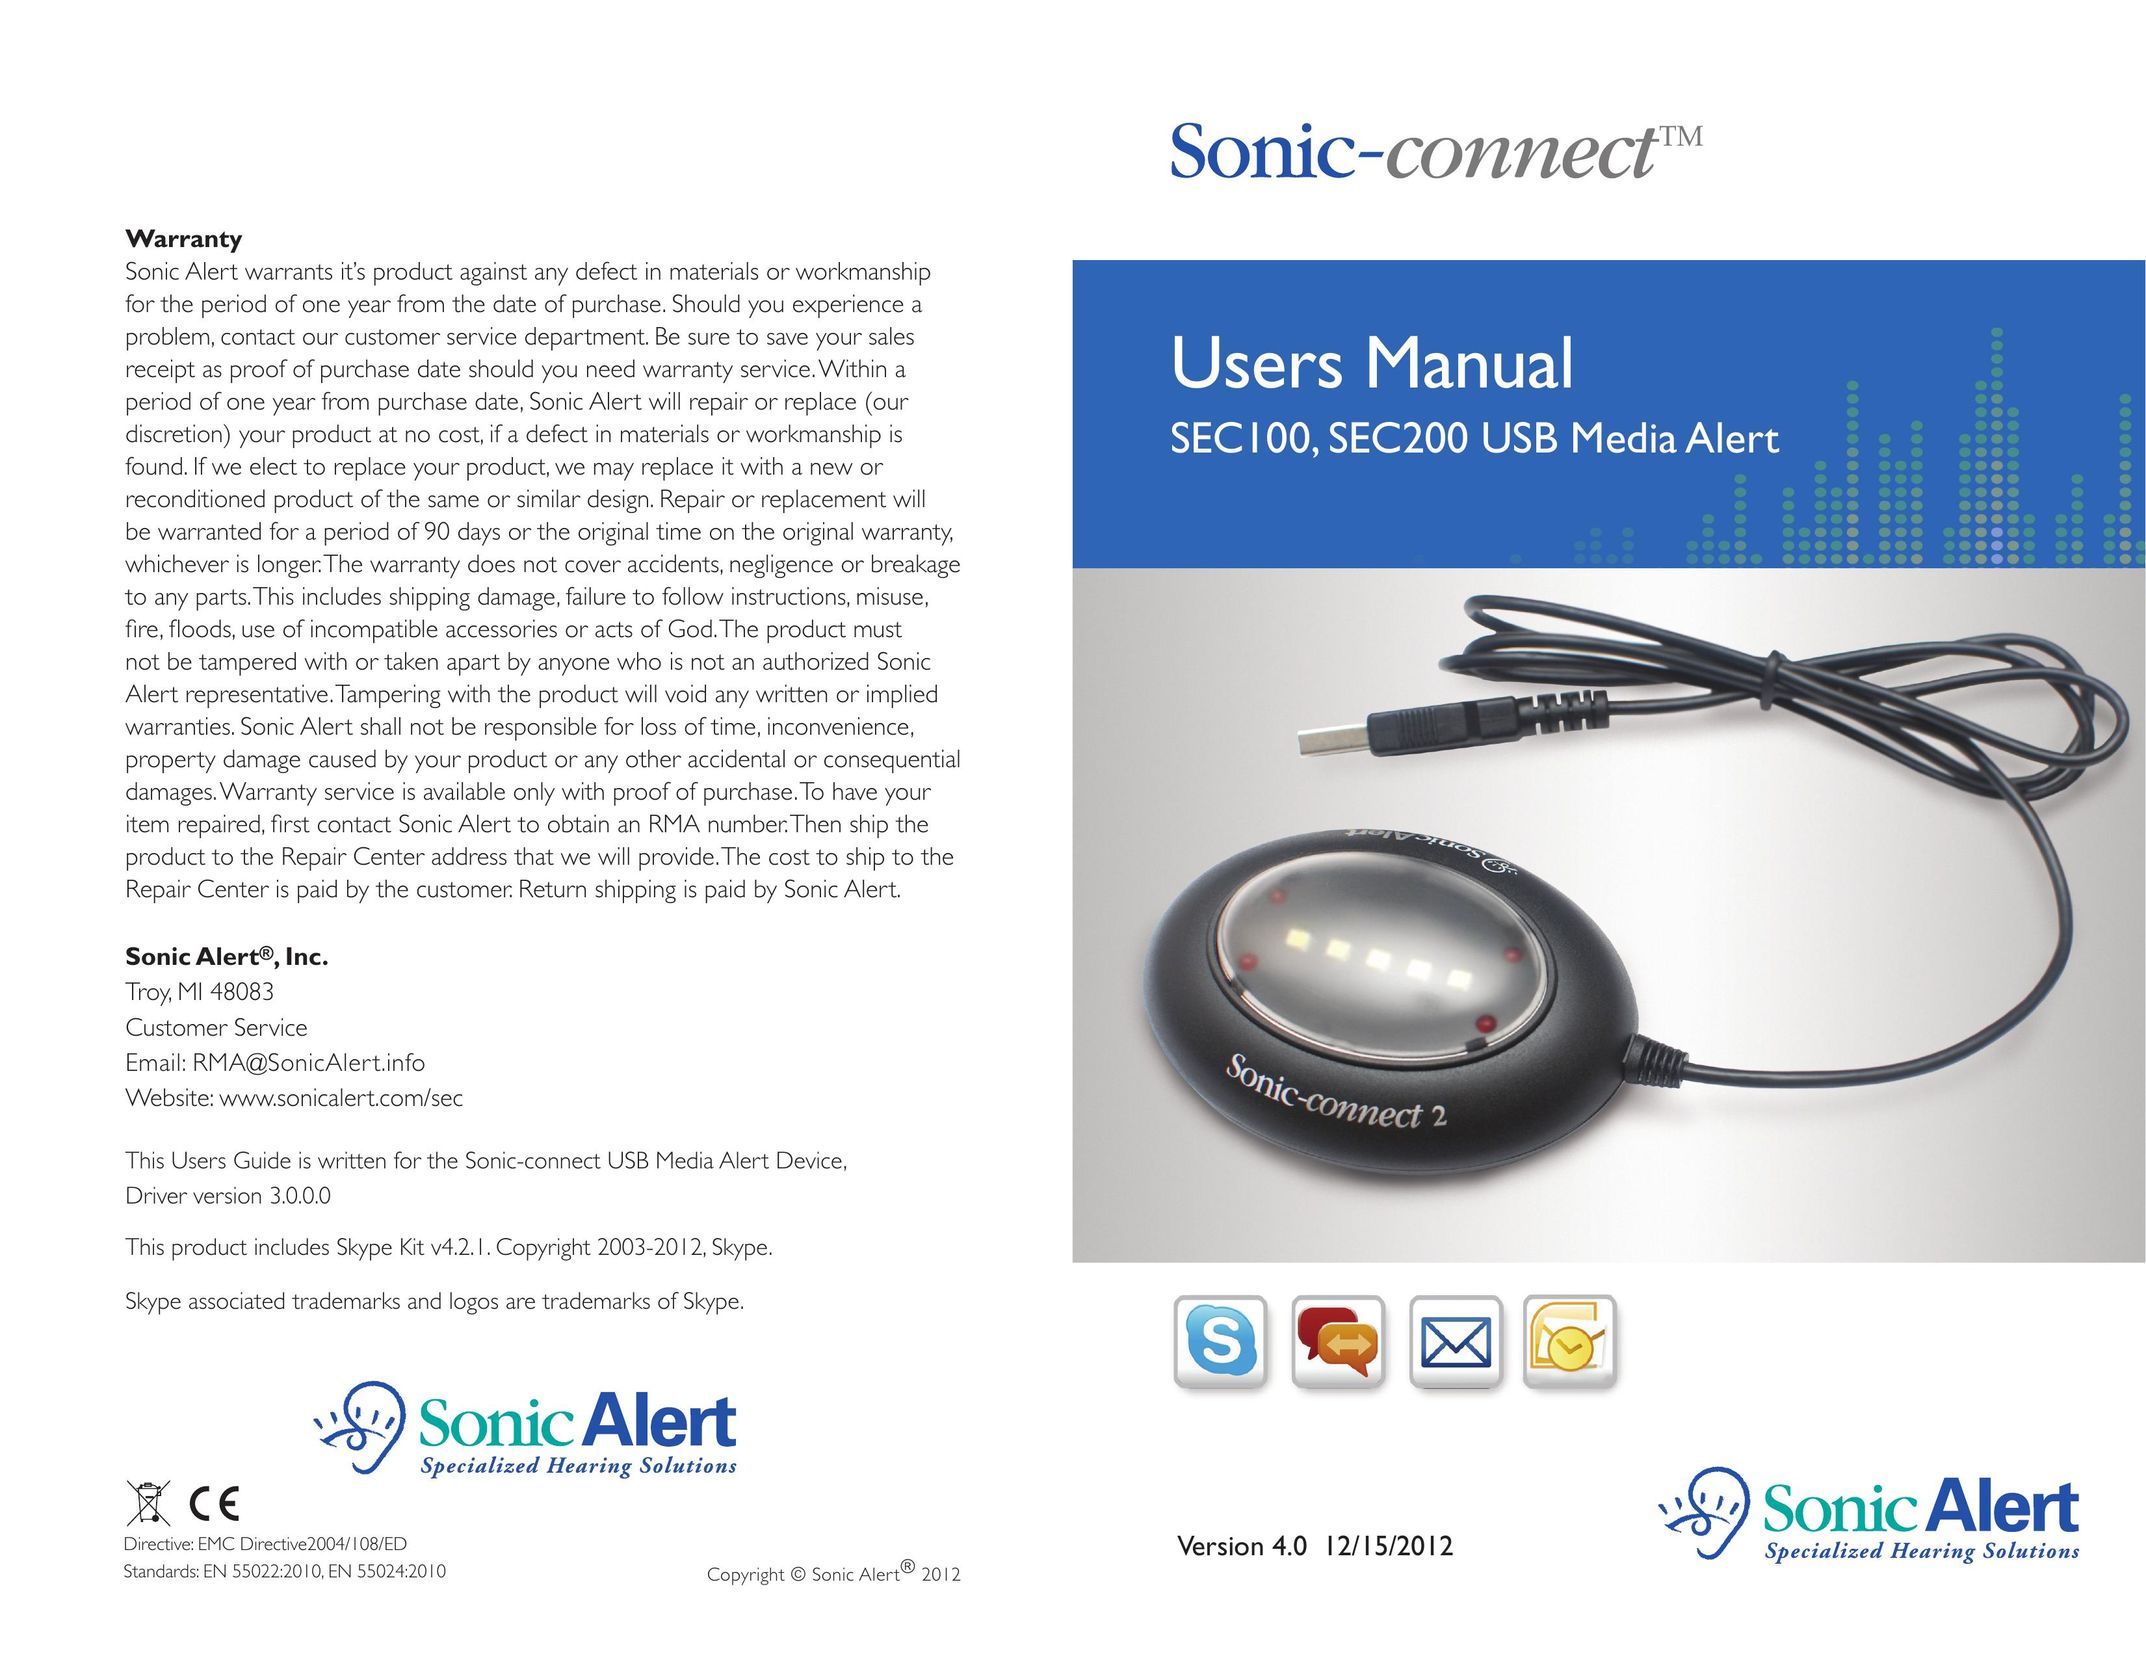 Sonic Alert SEC100 Musical Toy Instrument User Manual